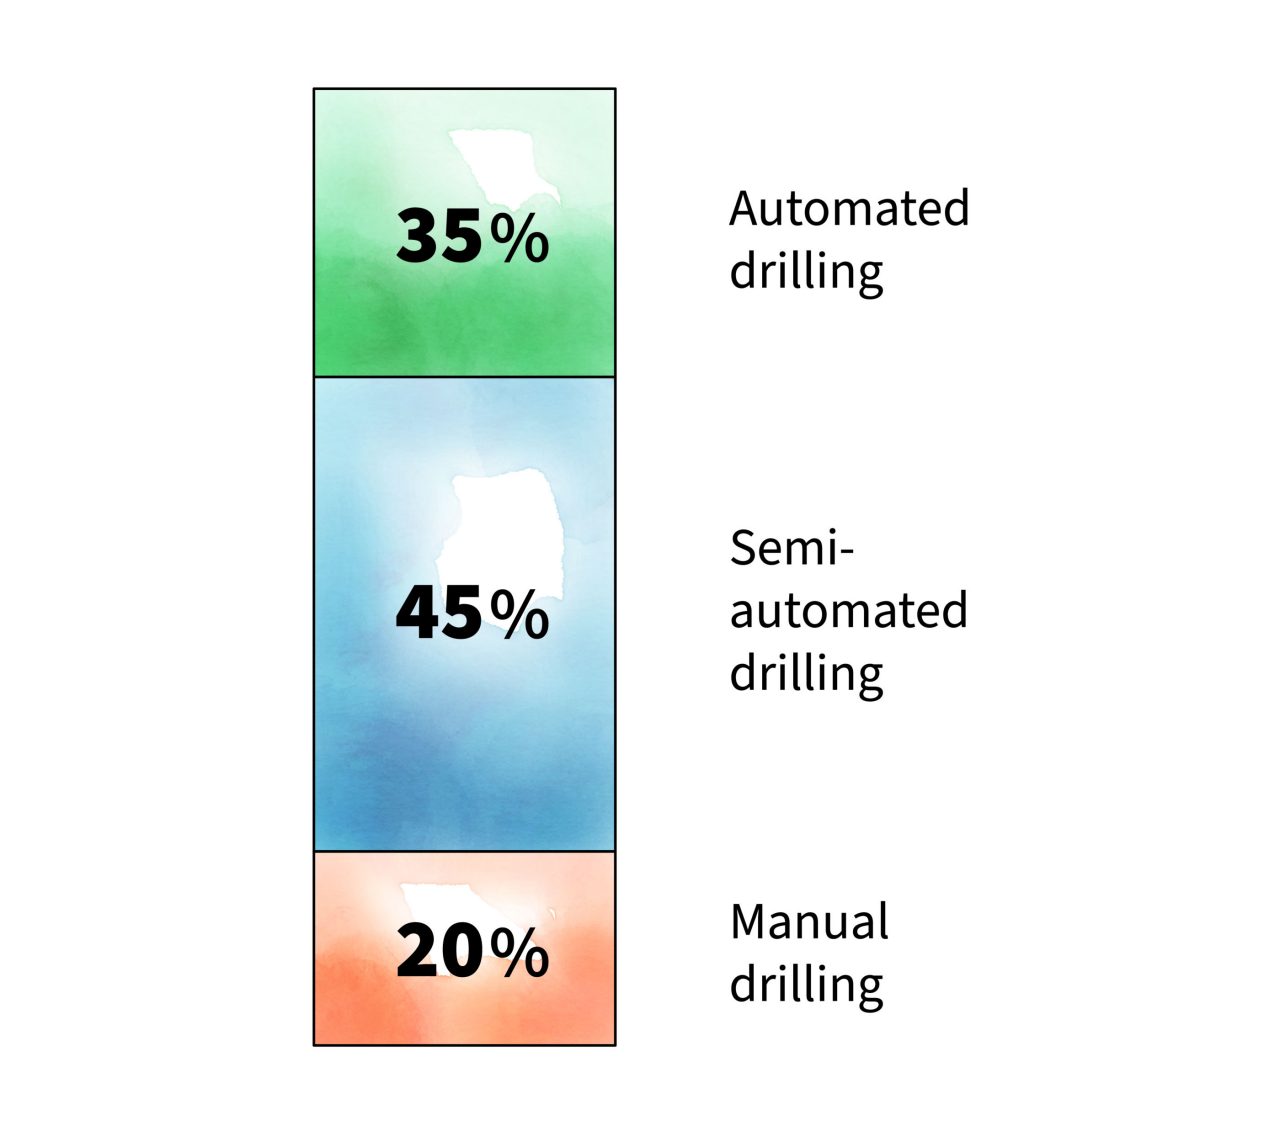 Manual drilling distribution